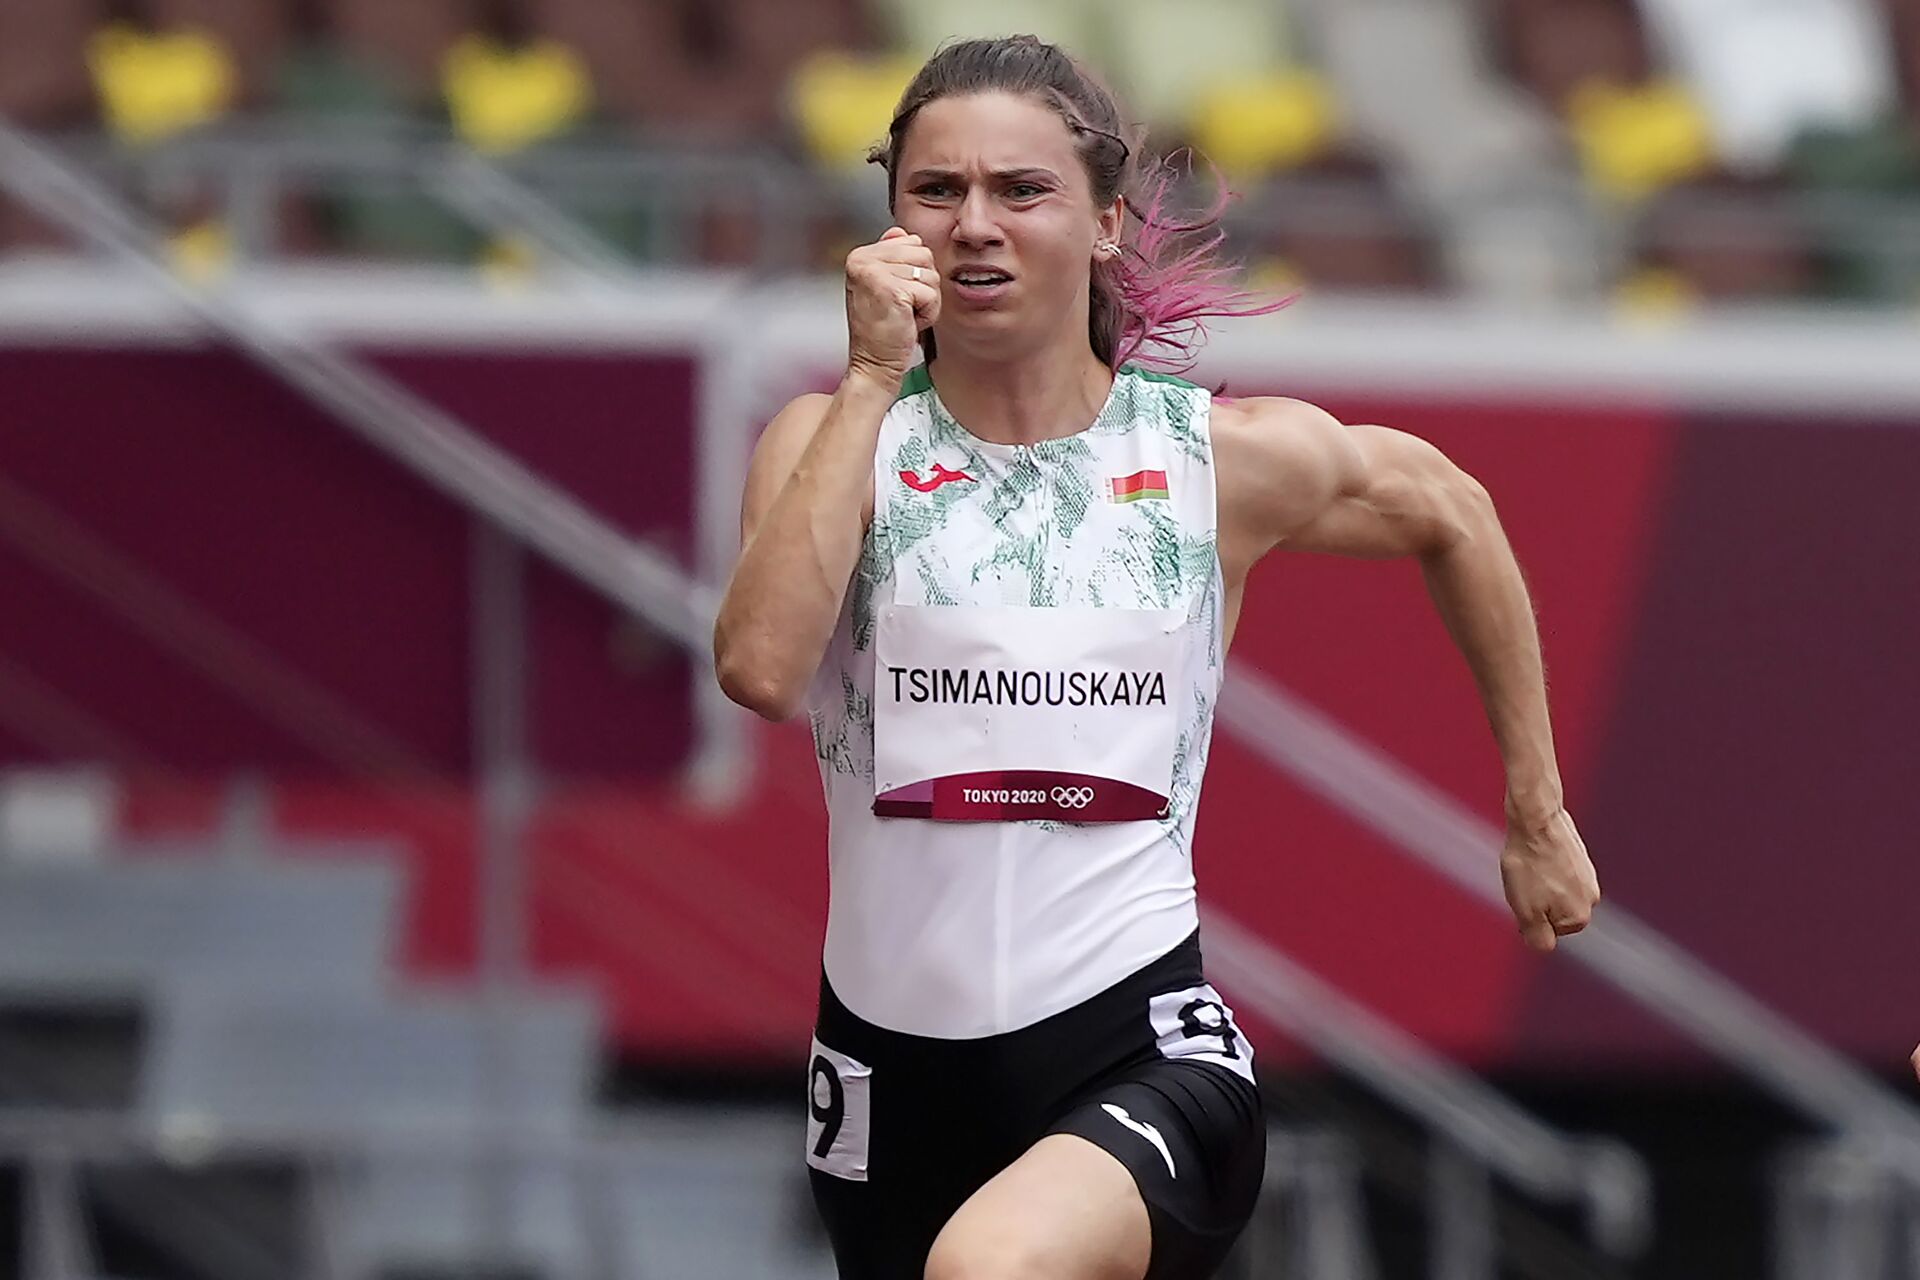 Kristina Timanovskaya, of Belarus, runs in the women's 100-meter run at the 2020 Summer Olympics, Friday, July 30, 2021.  - Sputnik International, 1920, 07.09.2021